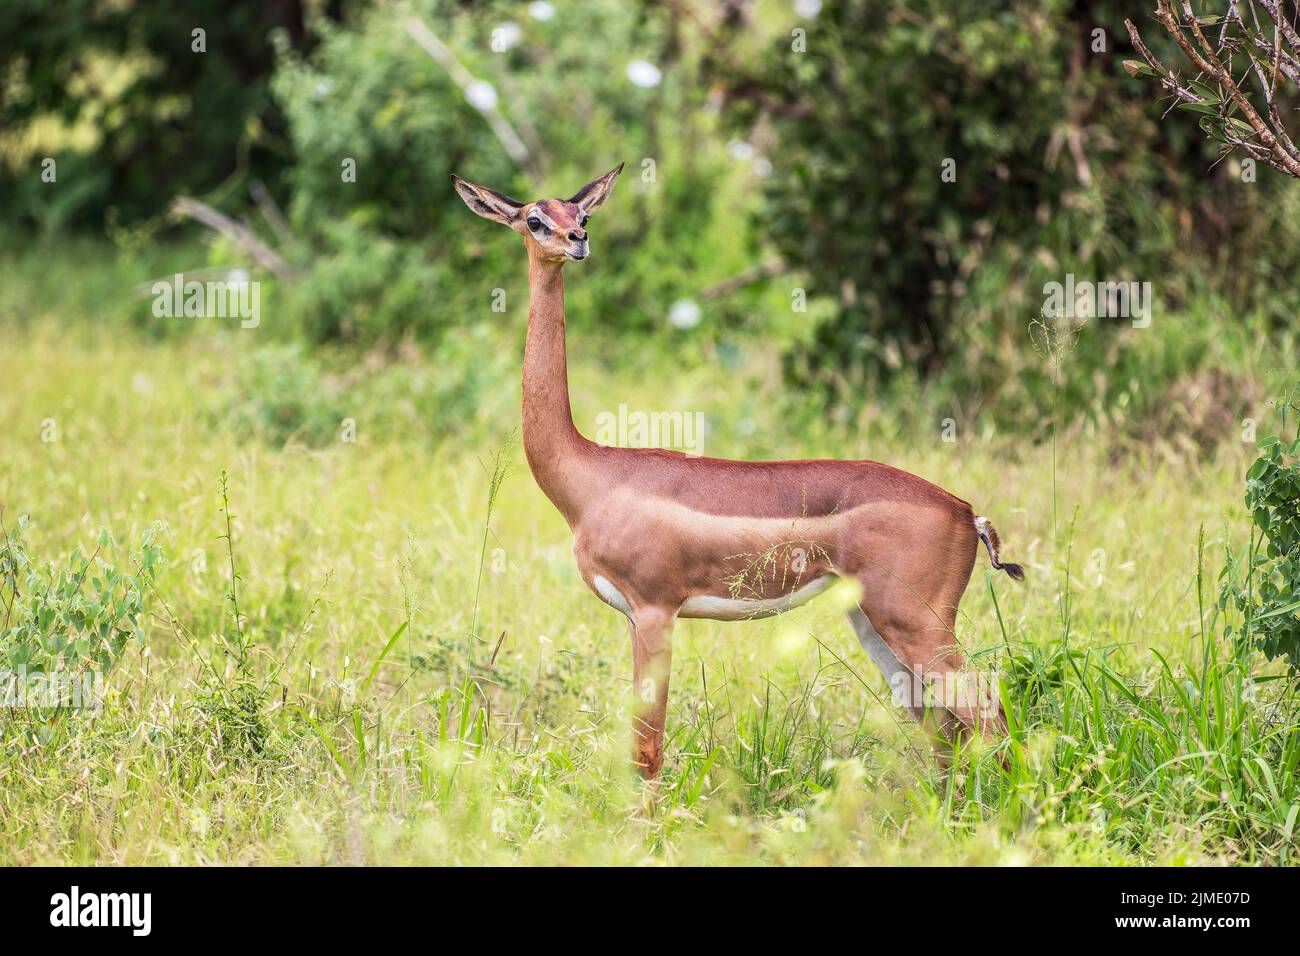 Gerenuk, Giraffengazelle nel Parco Nazionale di Tsavo Ovest, Kenya, Africa Foto Stock